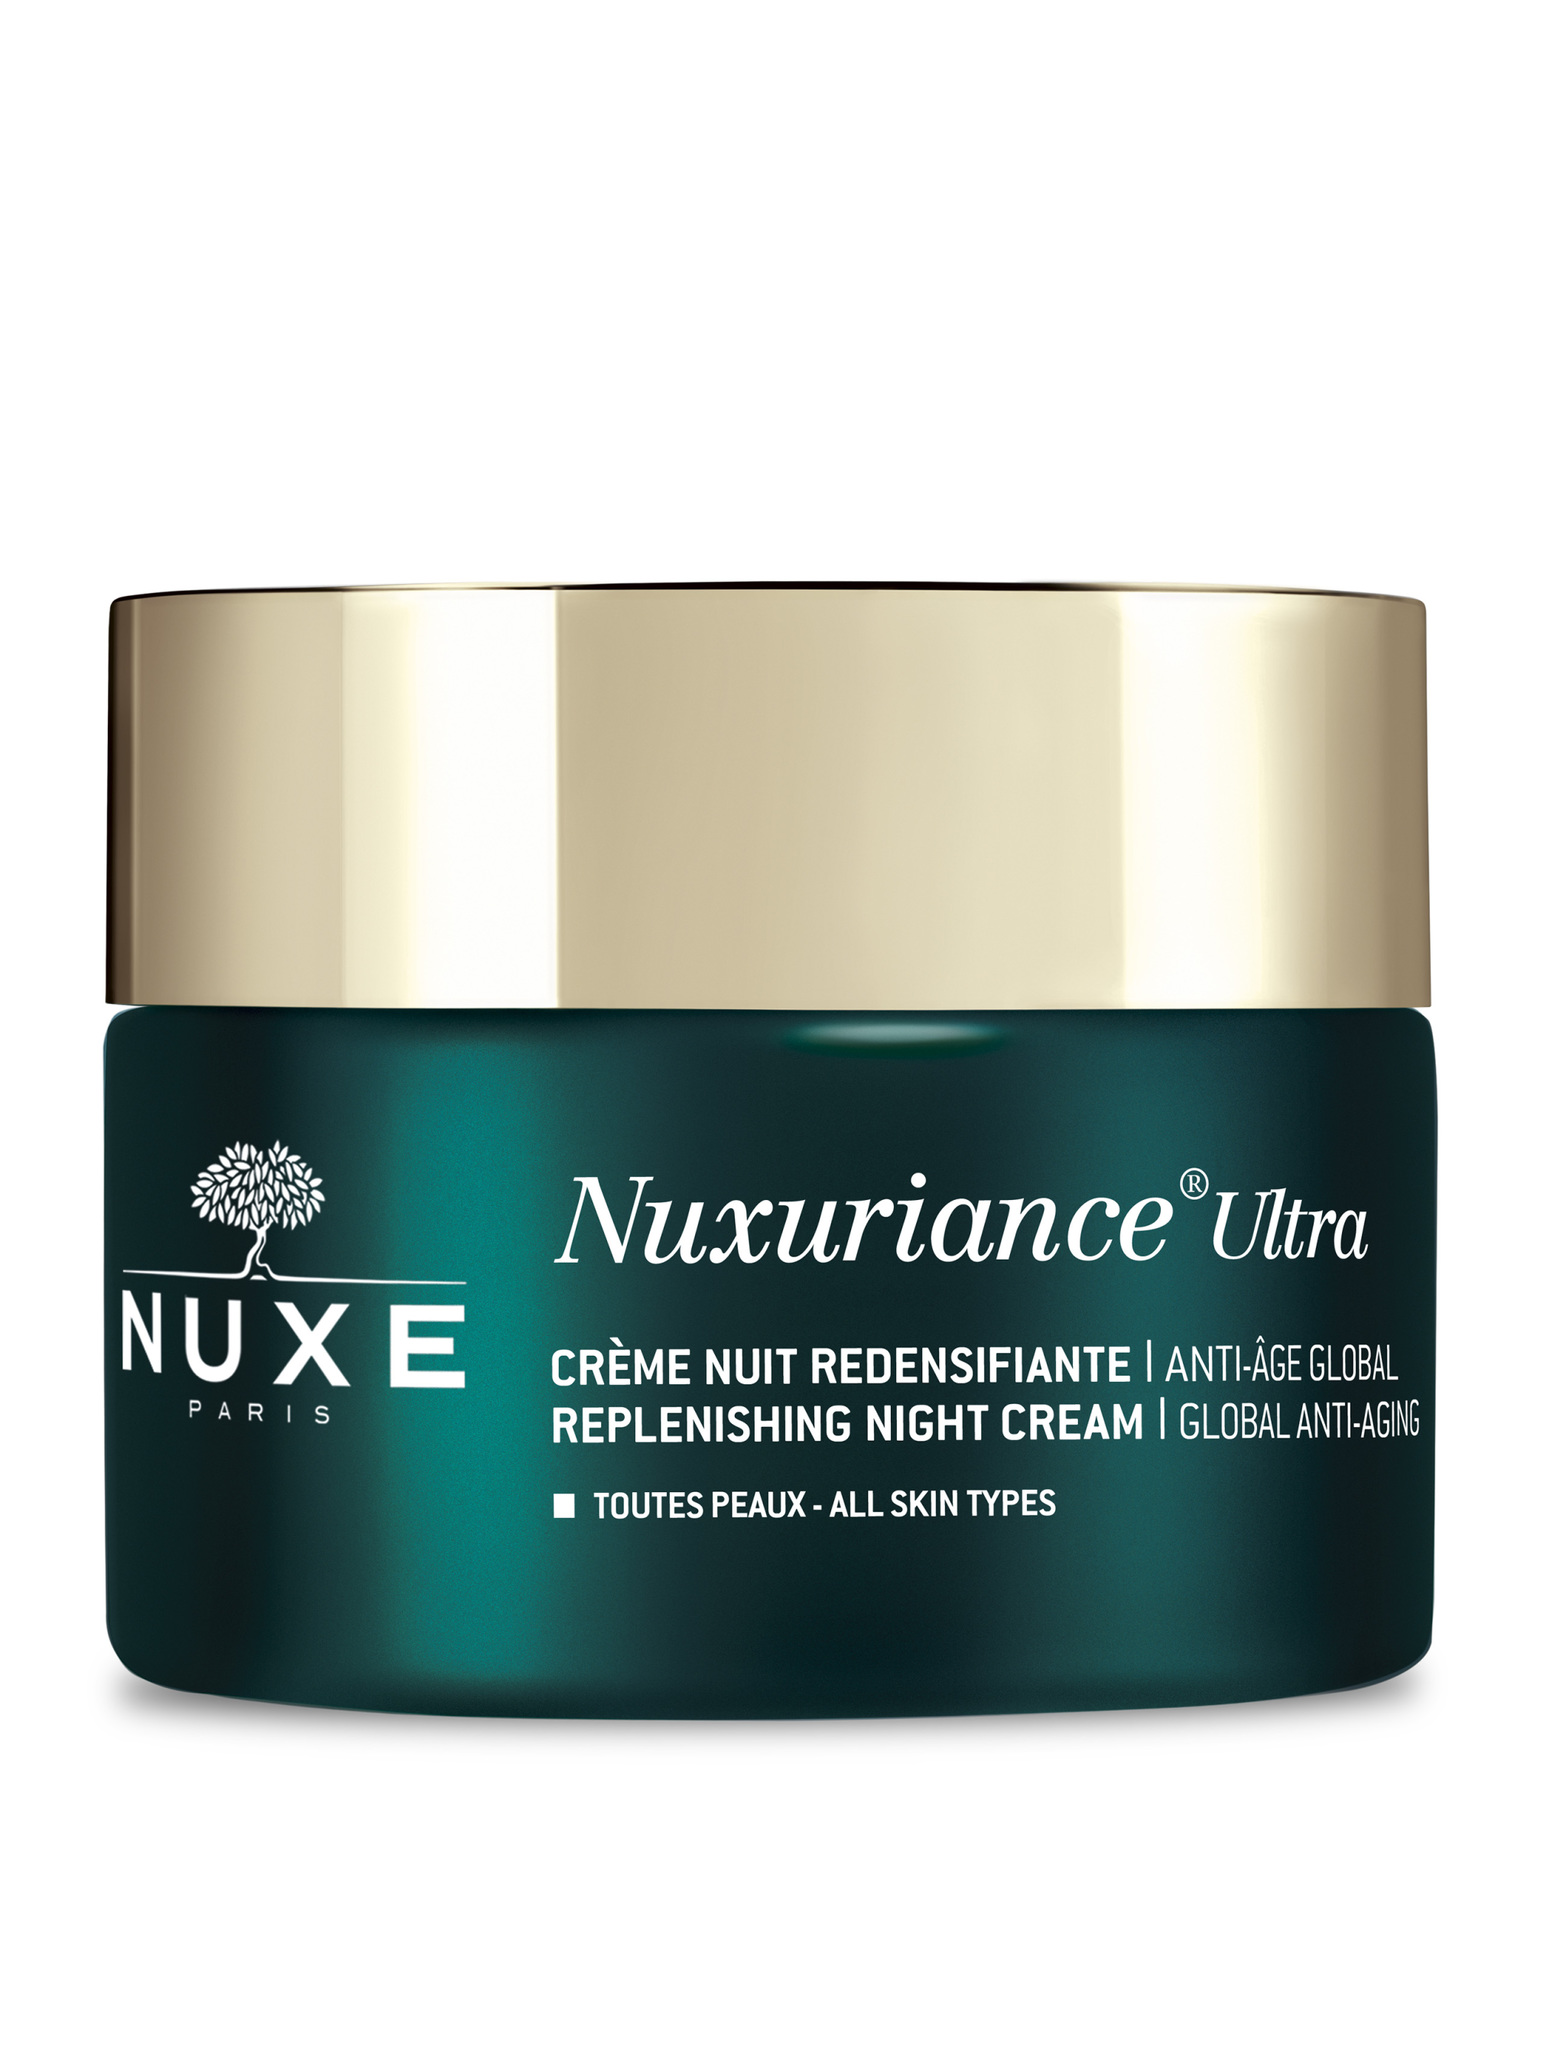 Nuxuriance Ultra Replenshing Night Cream